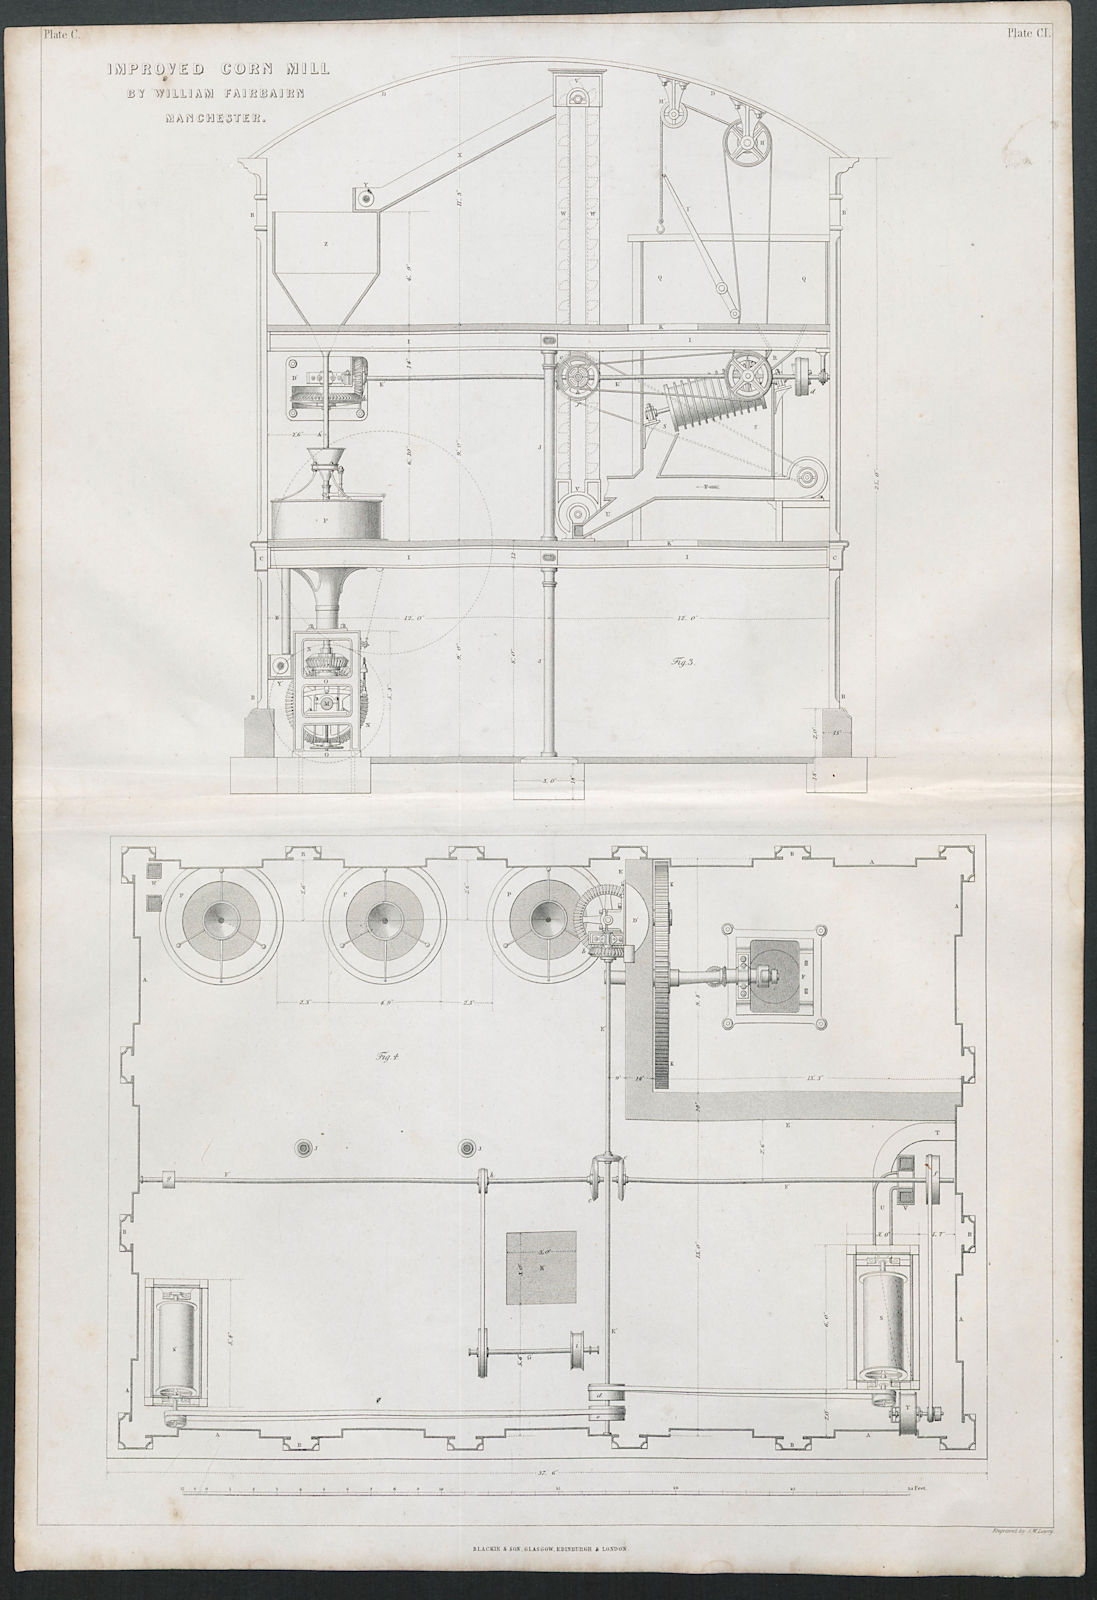 19C ENGINEERING DRAWING Improved corn mill. William Fairbairn, Manchester 1847